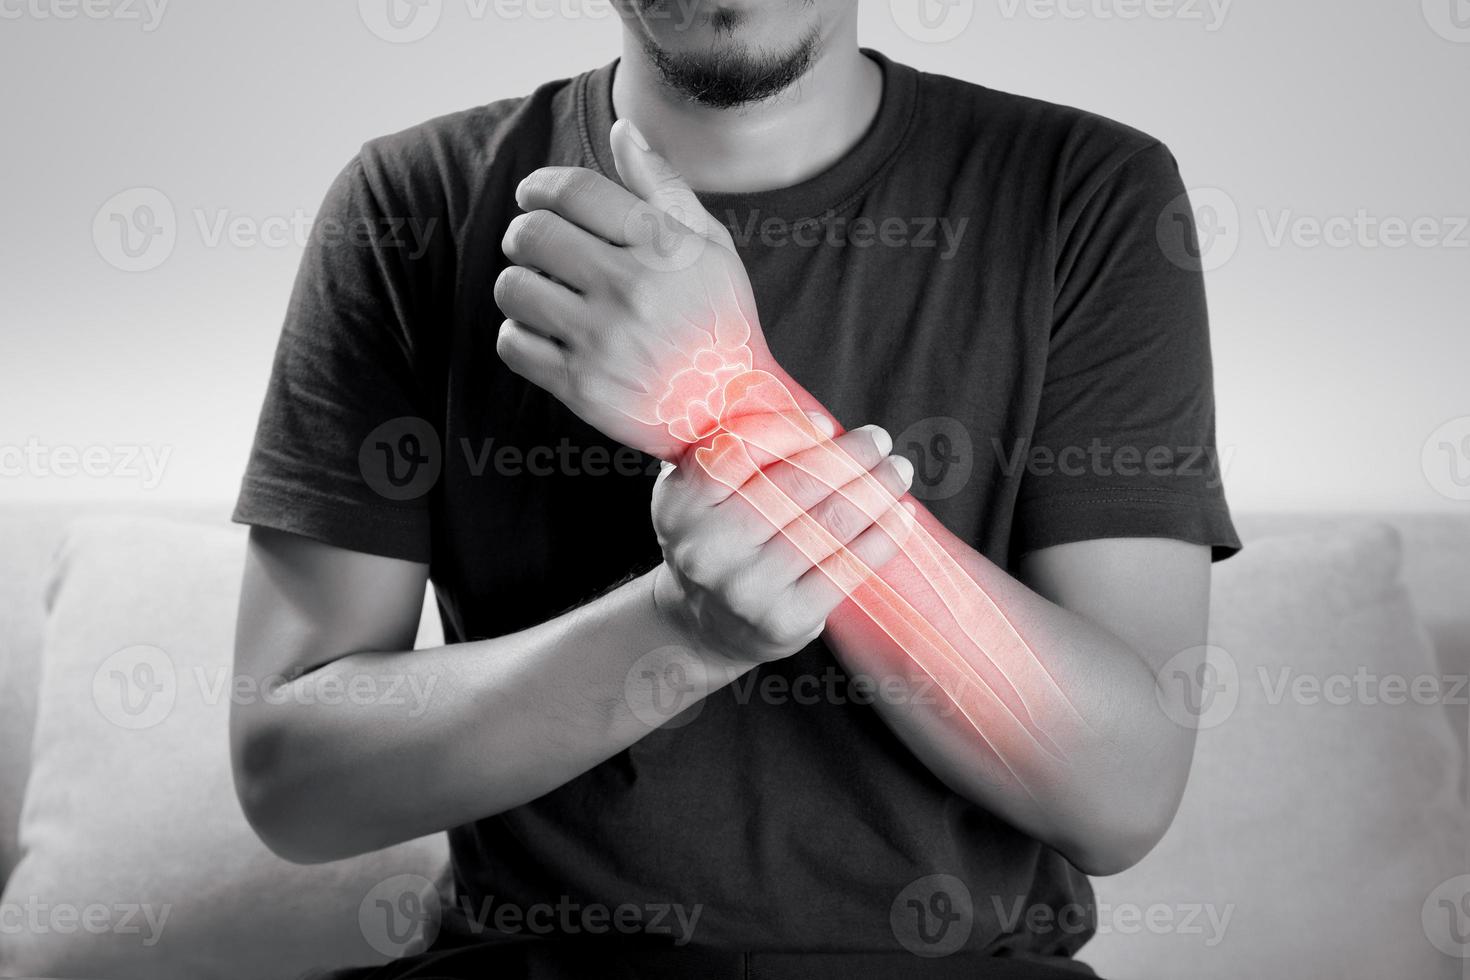 Mens met osteoporose symptomen in de arm. foto